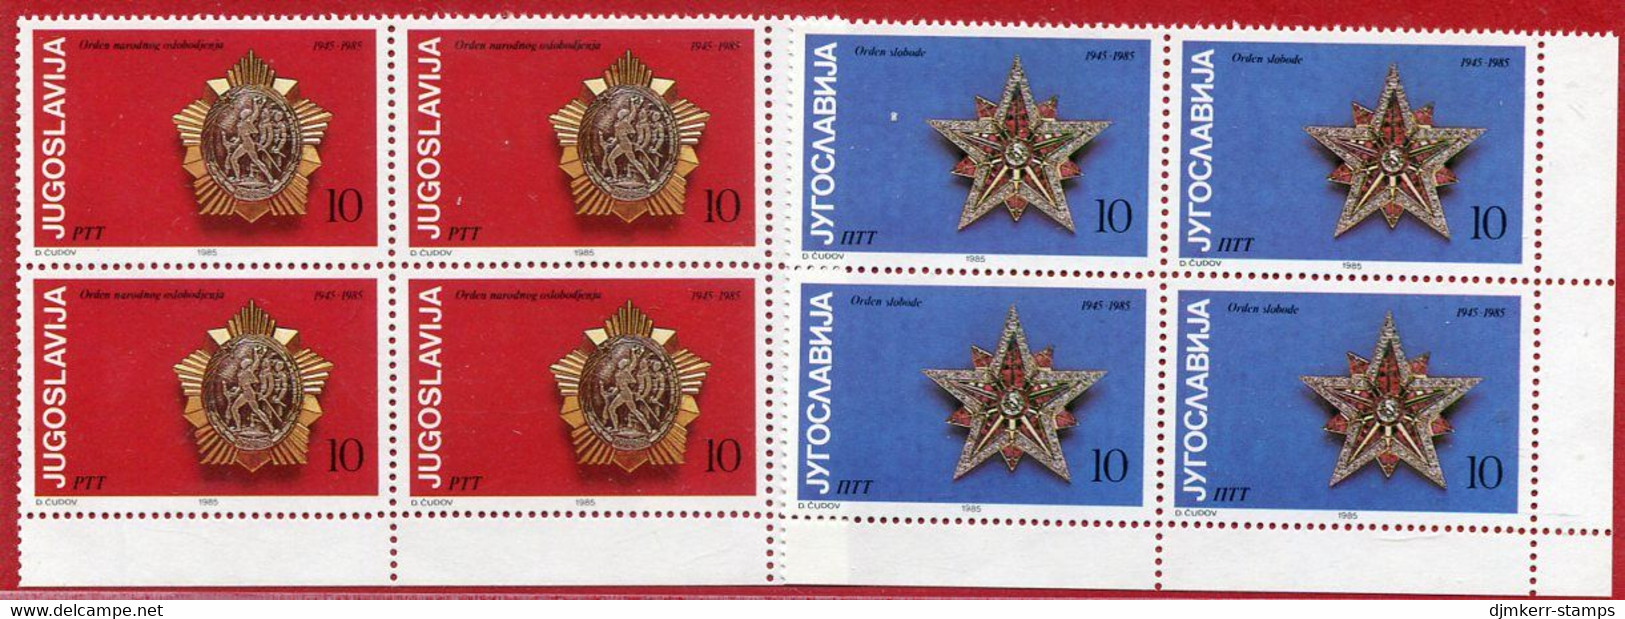 YUGOSLAVIA 1985 Anniversary Of Victory Blocks Of 4 MNH / **.  Michel 2107-08 - Unused Stamps